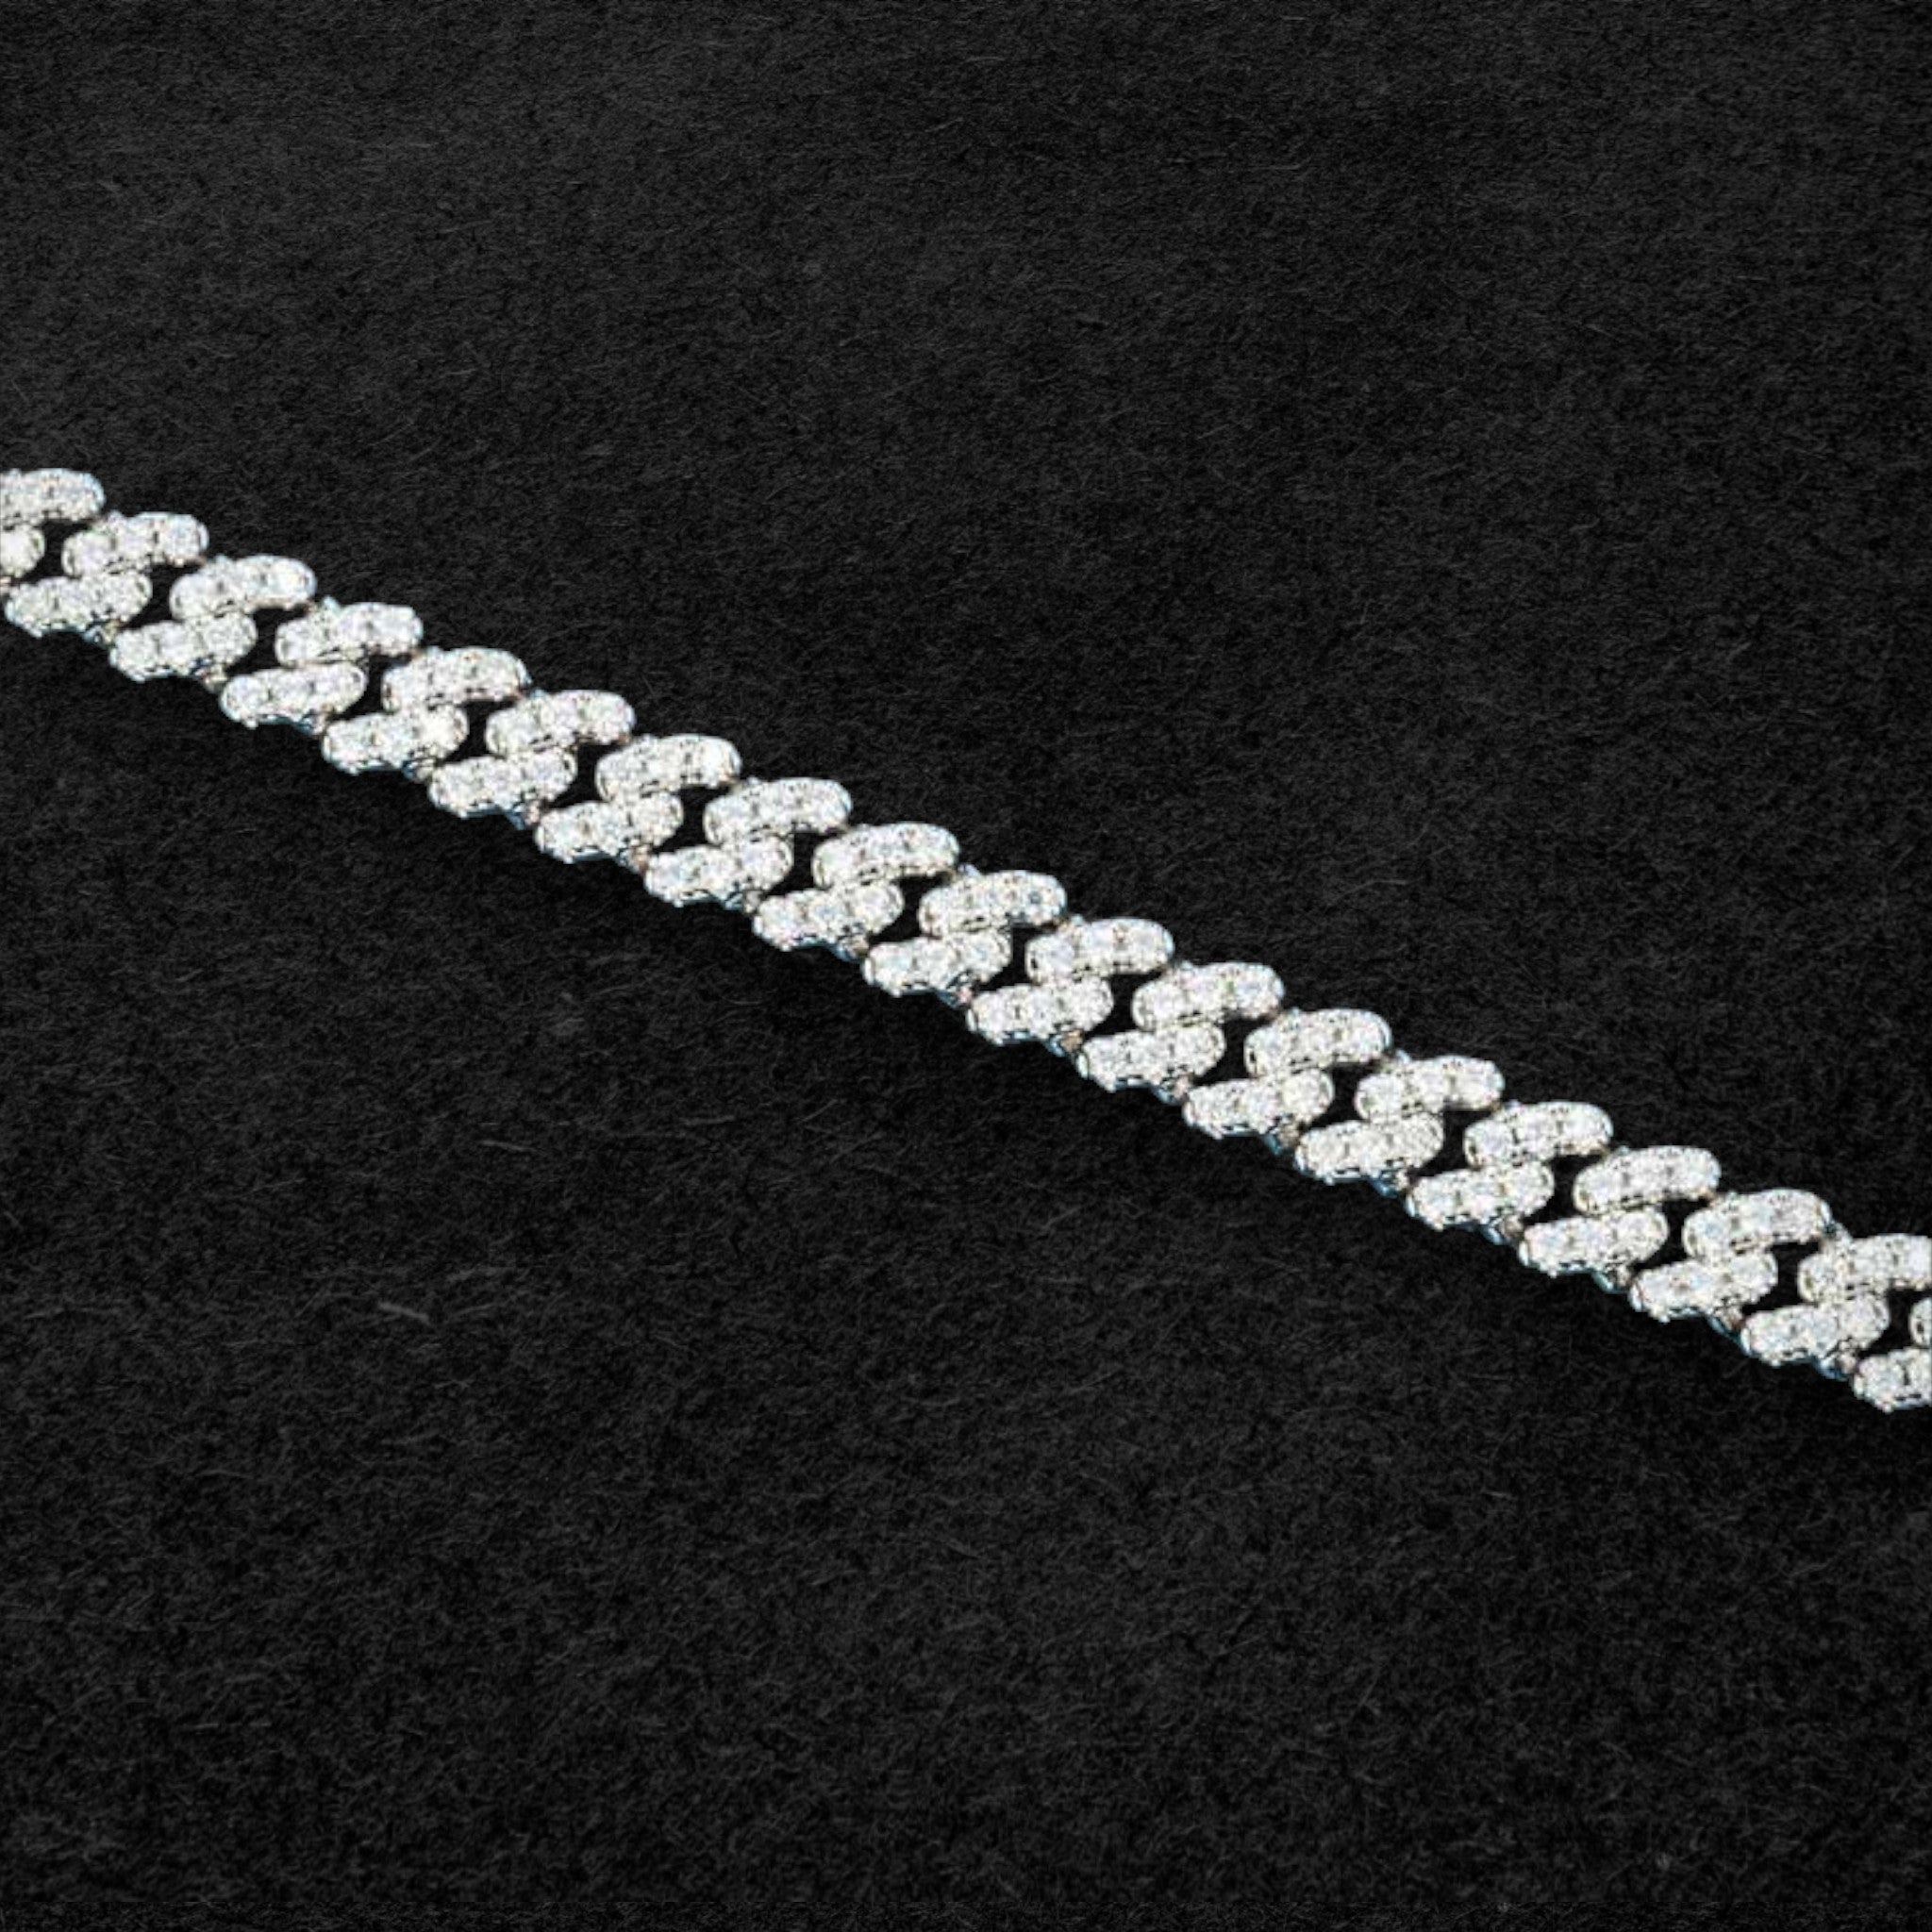 6MM Moissanite Miami Cuban Link Bracelet